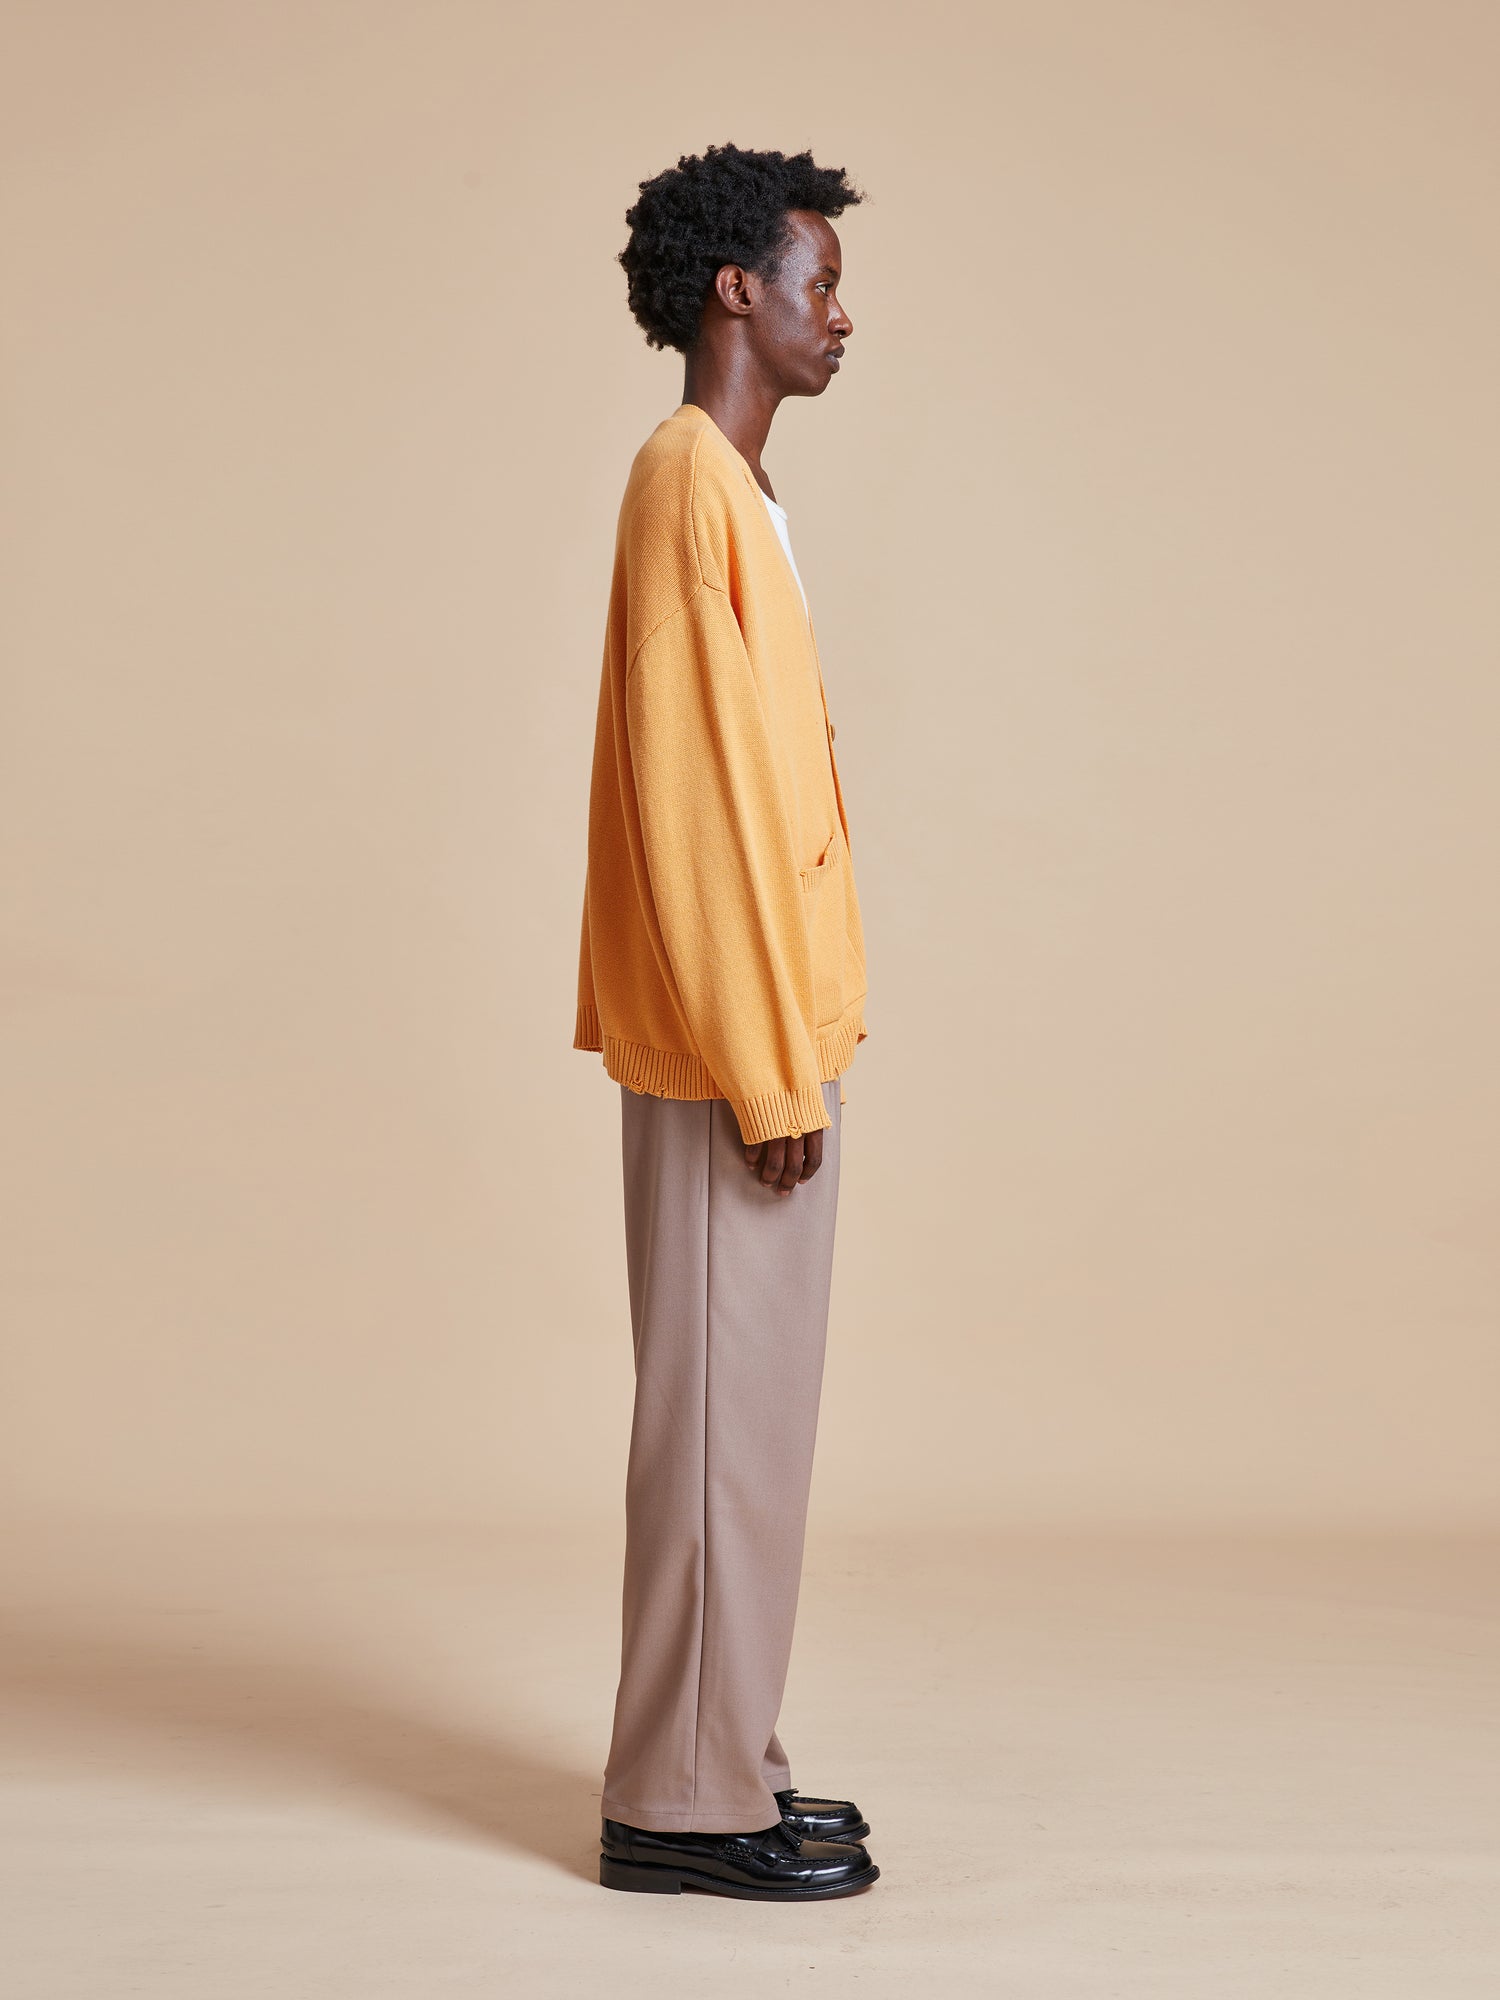 WornOnTV: Devi's orange floral cardigan and brown corduroy pants